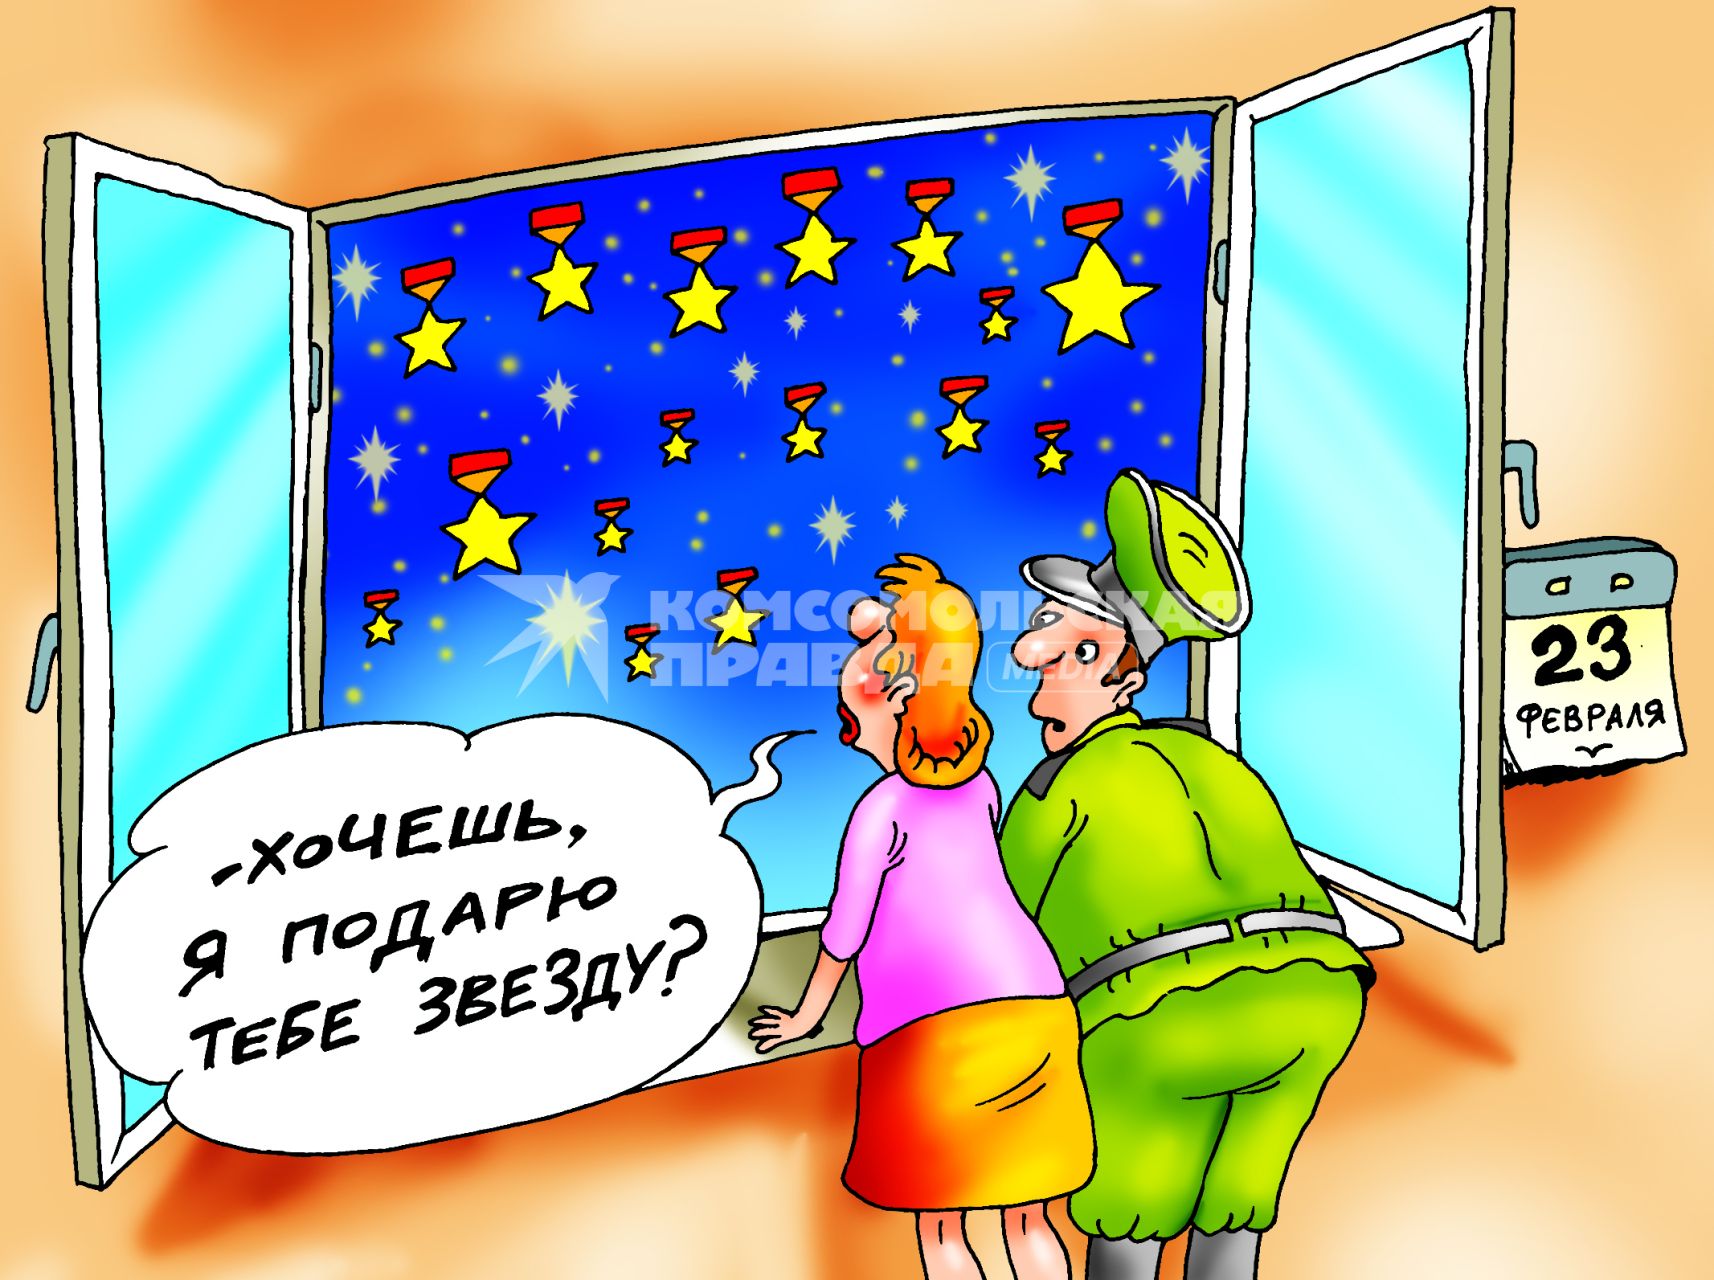 Карикатура на тему подарков на 23 февраля.